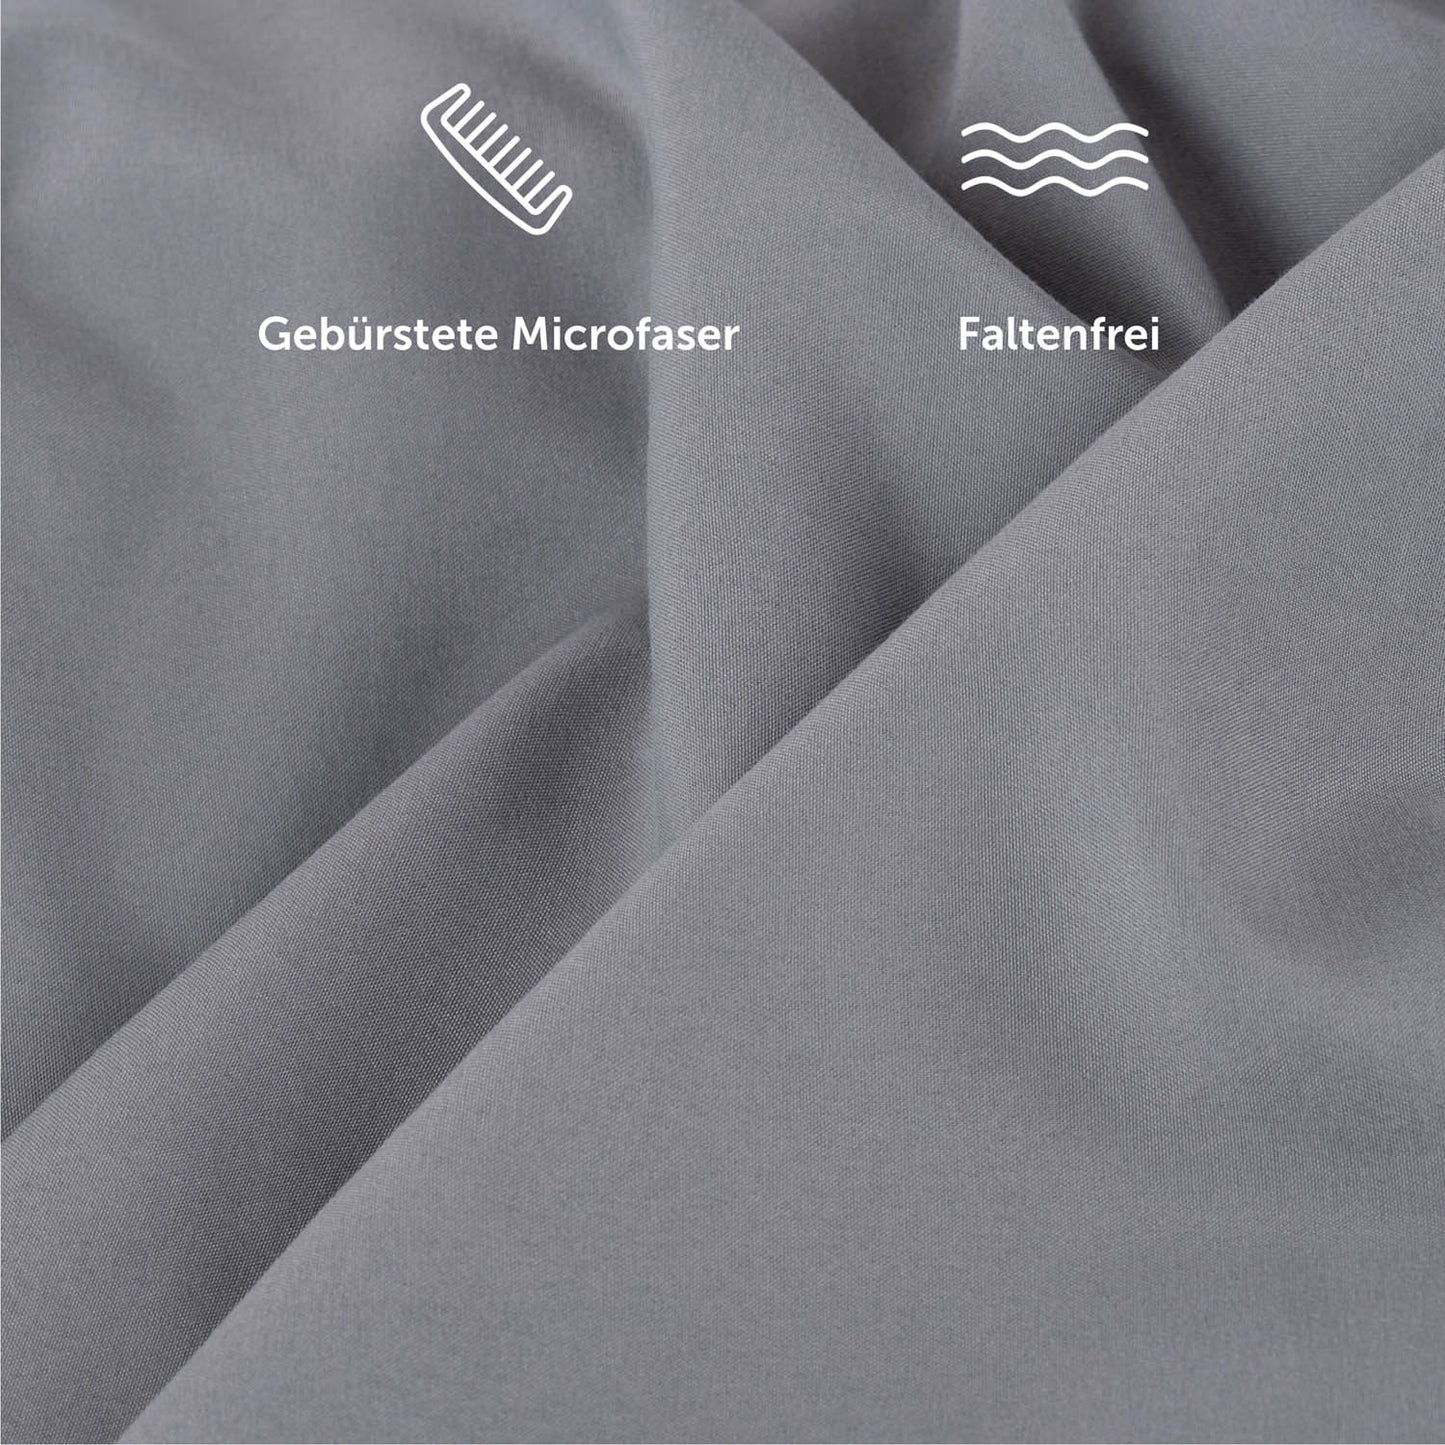 Bettbezug Set aus Mikrofaser - Superweich, Oekotex Zertifiziert, 200x220cm